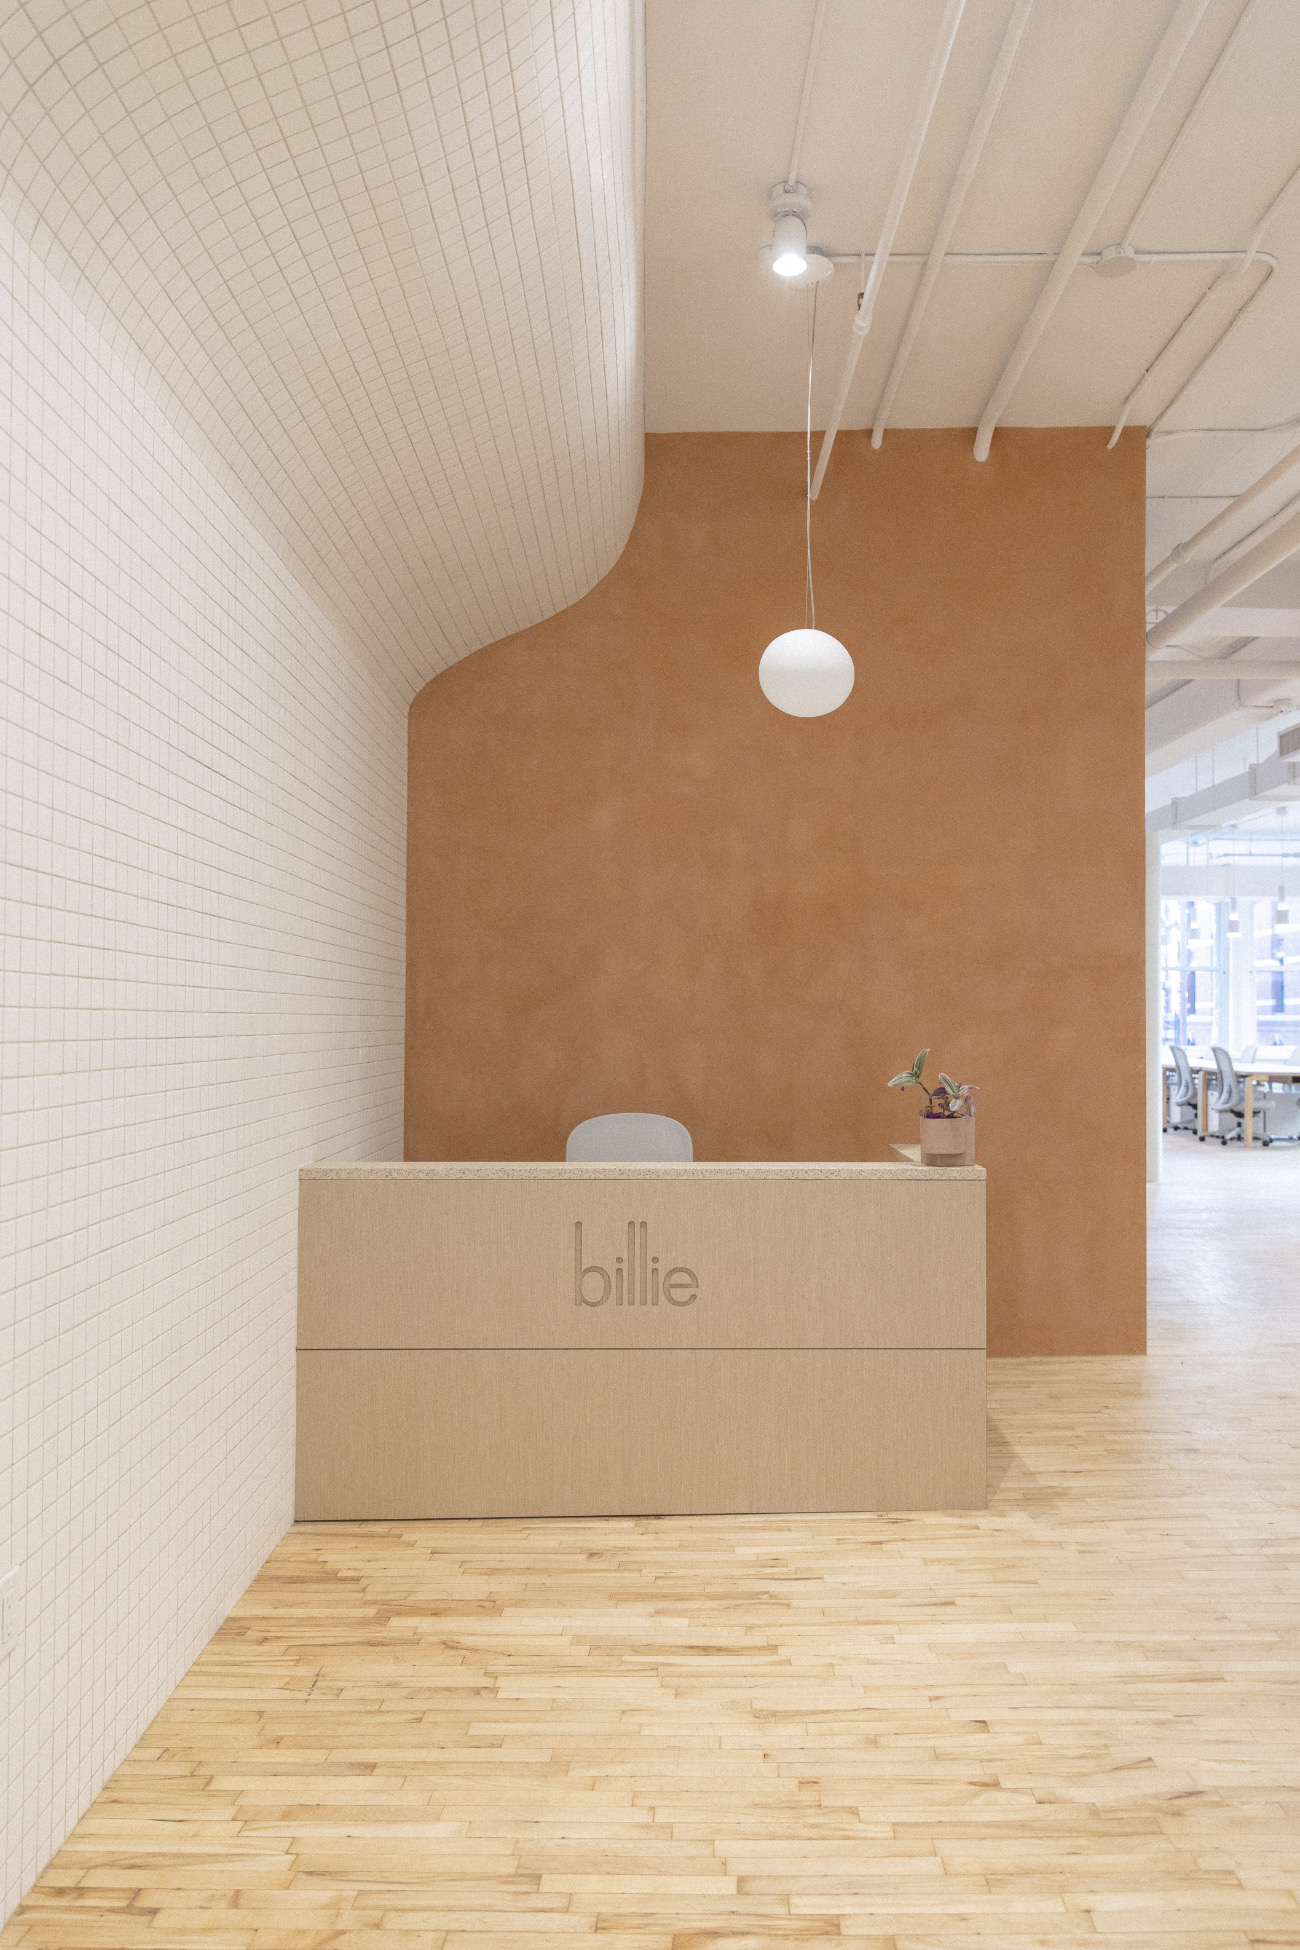 billie-office-nyc-7